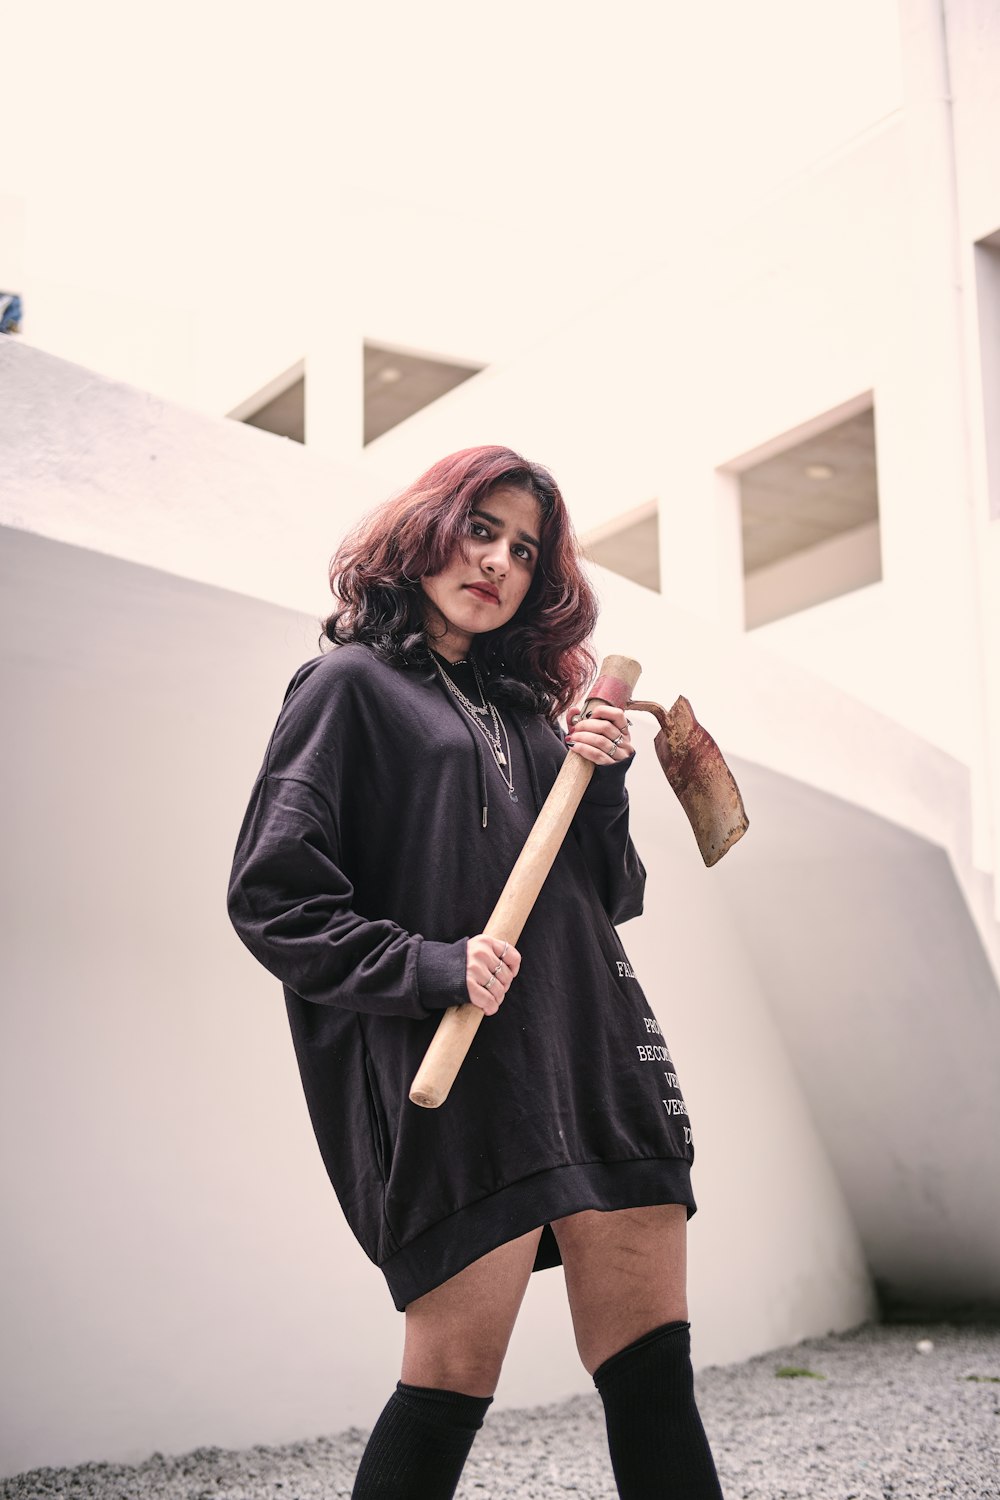 a woman in a black hoodie holding a baseball bat